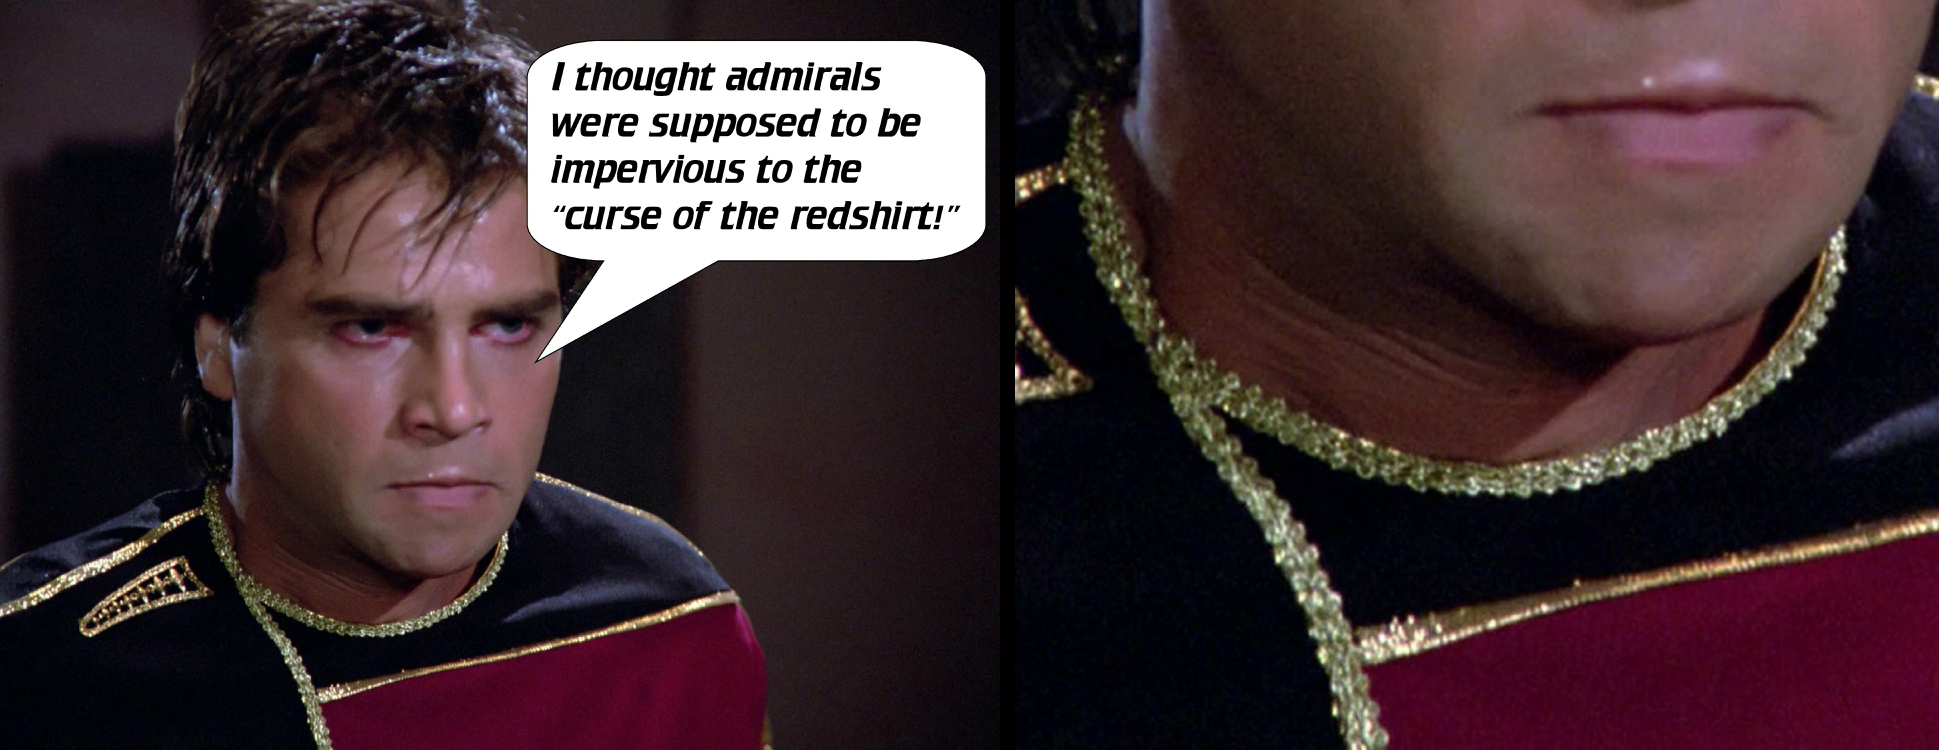 TNG admiral uniform (season 1) analysis - Star Trek Costume Guide